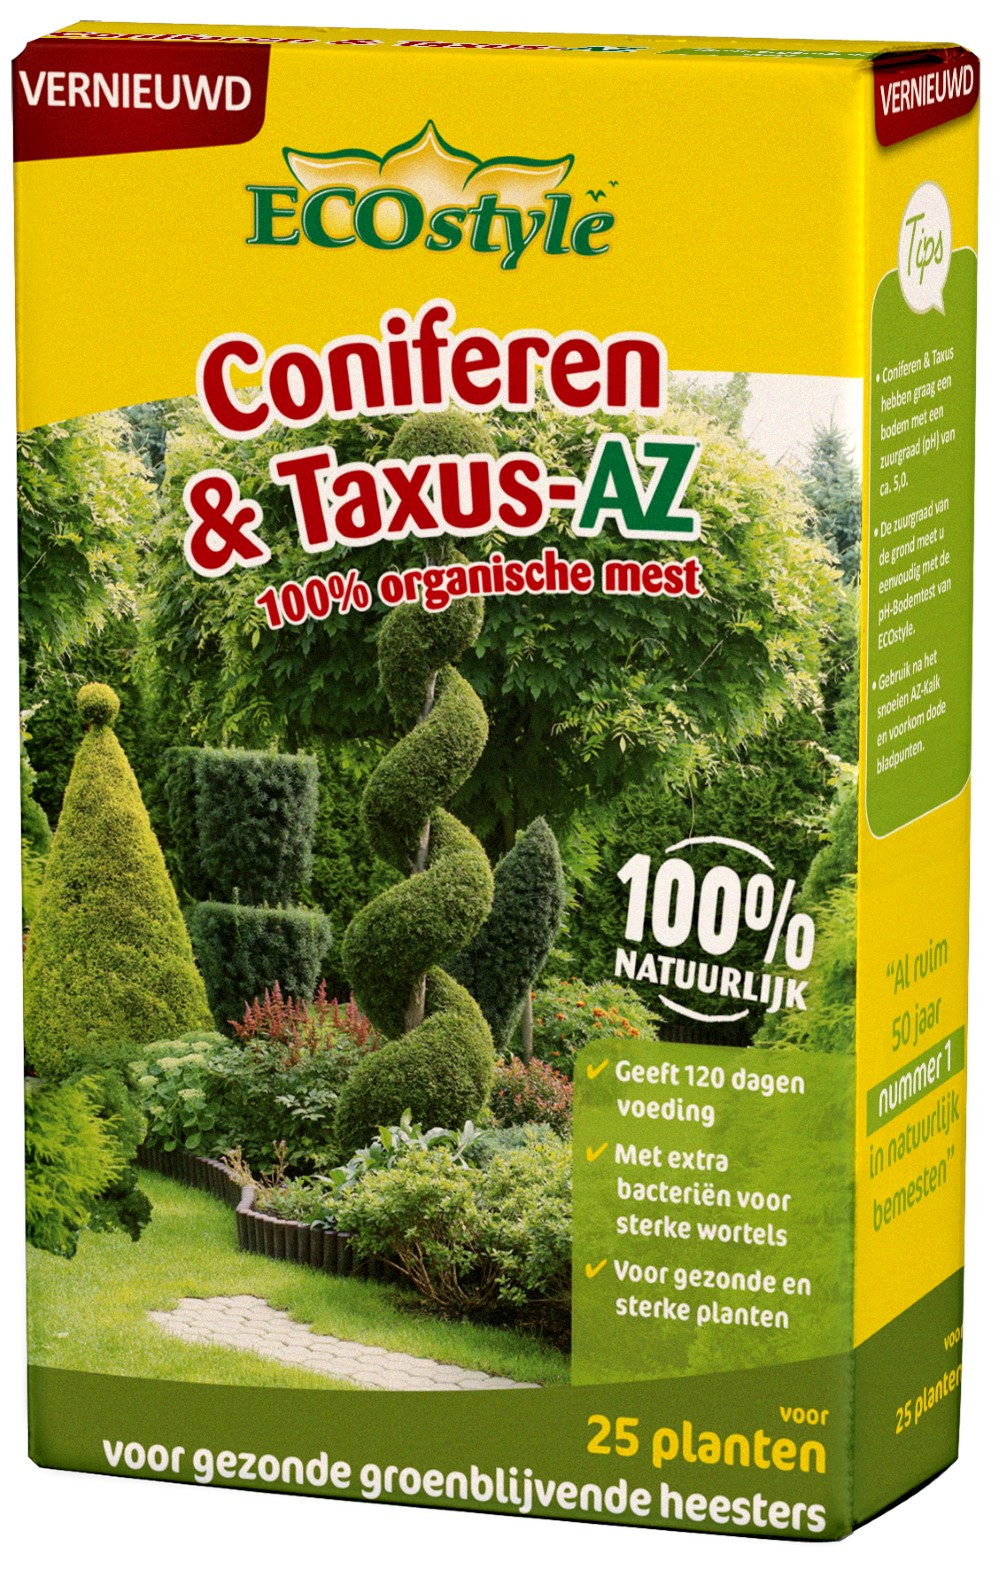 Ecostyle Coniferen & Taxus-AZ 800 g